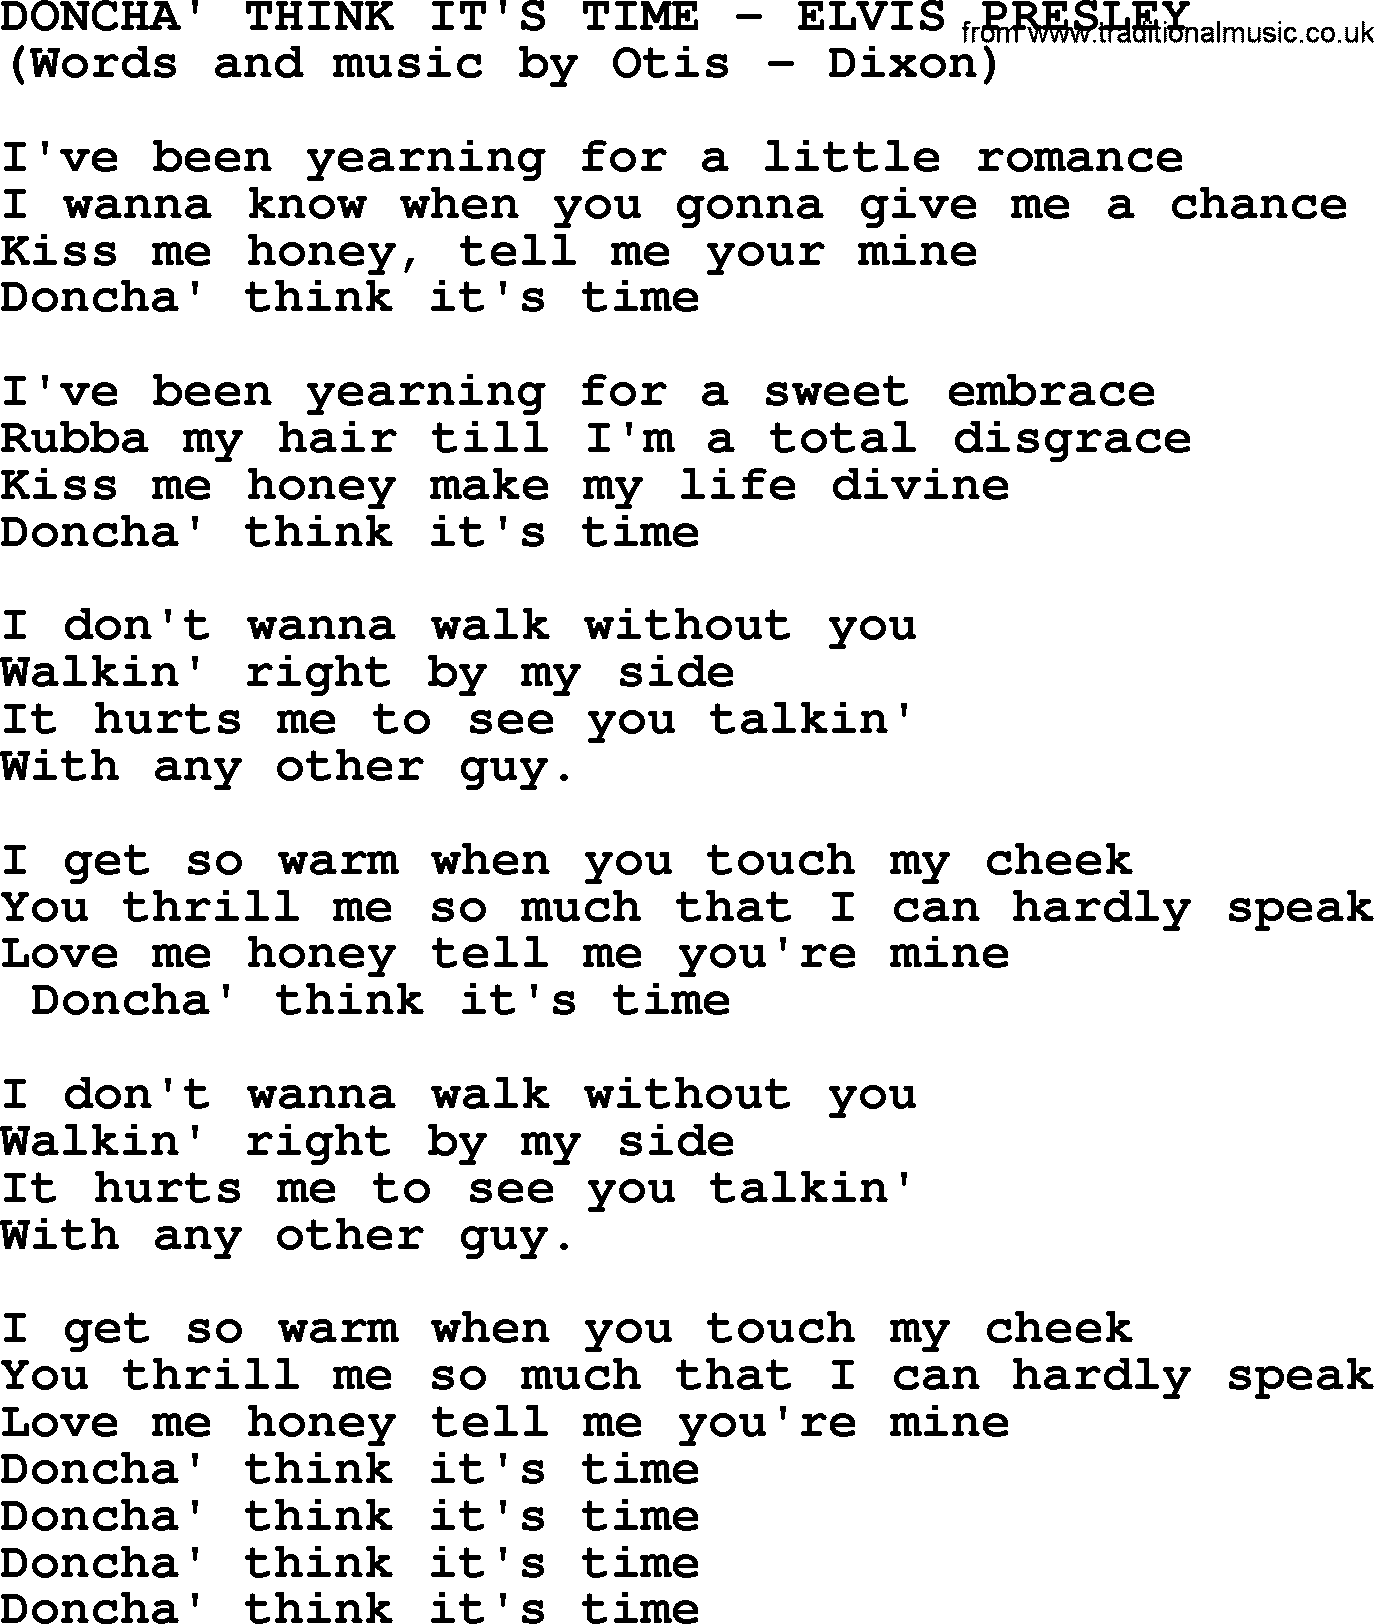 Elvis Presley song: Doncha' Think It's Time lyrics